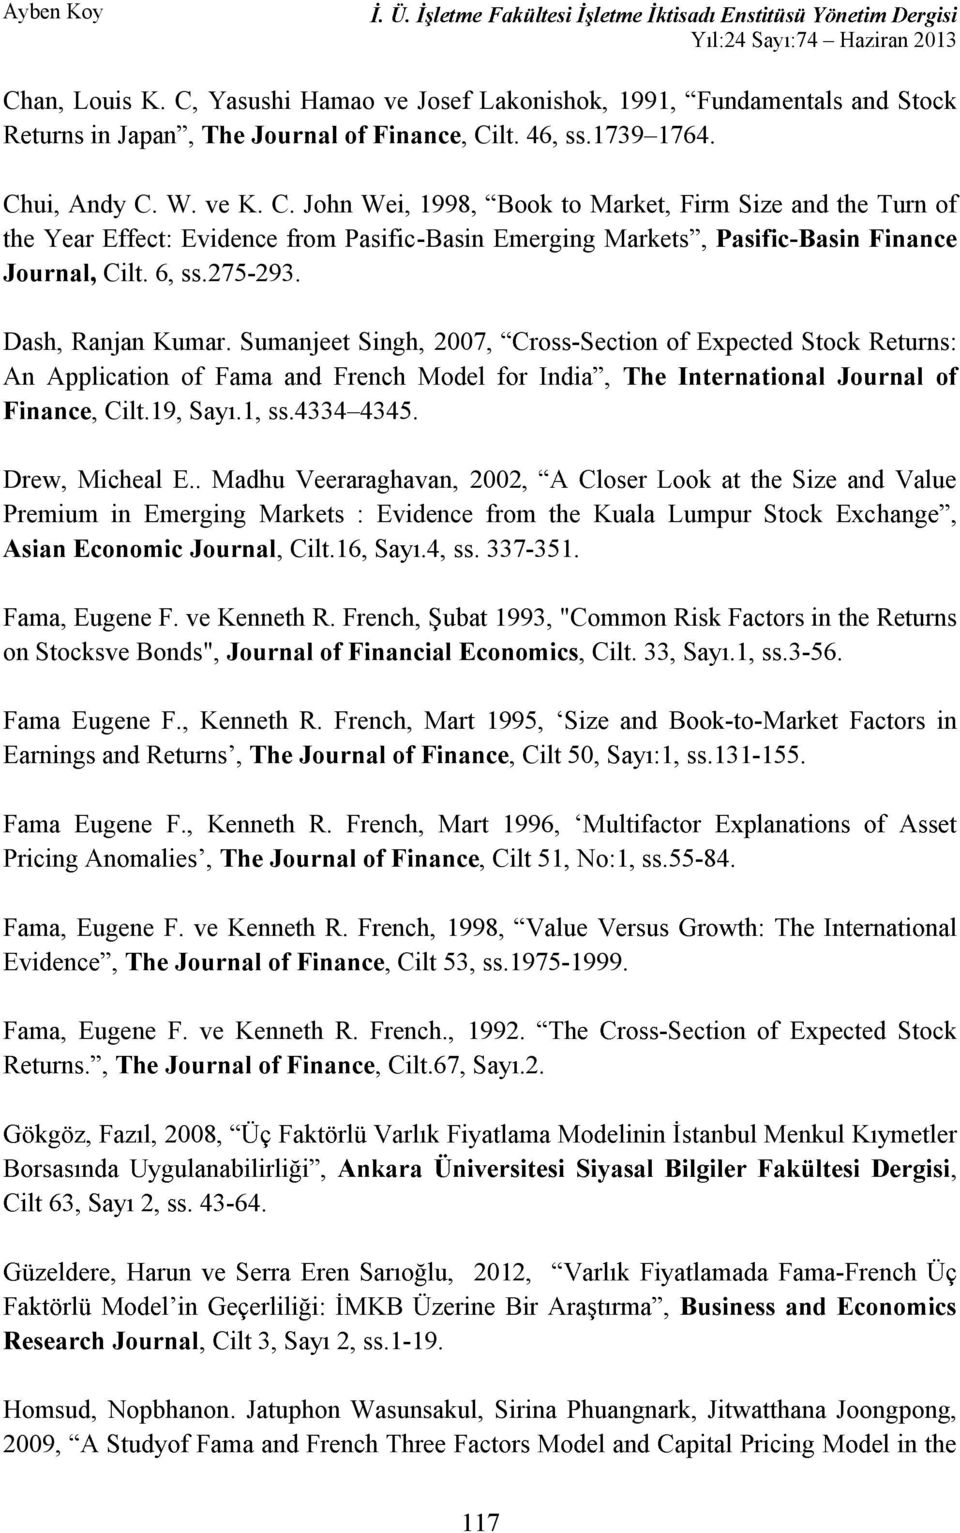 . Madhu Veeraraghavan 2002 Premium in Emerging Markets : Evidence from the Kuala Lumpur Stock Exc Asian Economic Journal Cilt.16.4 ss. 337-351. Fama Eugene F. ve Kenneth R.